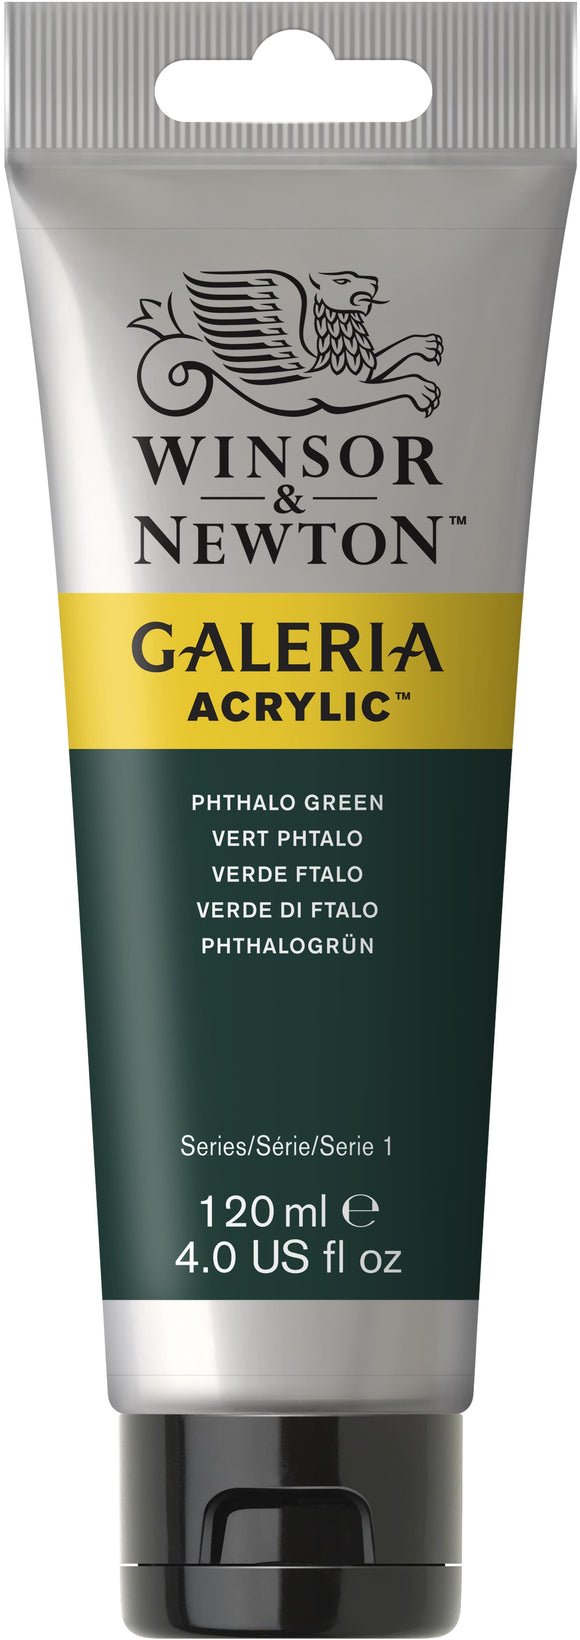 Winsor & Newton Galeria Acrylic Phthalo Green 120Ml